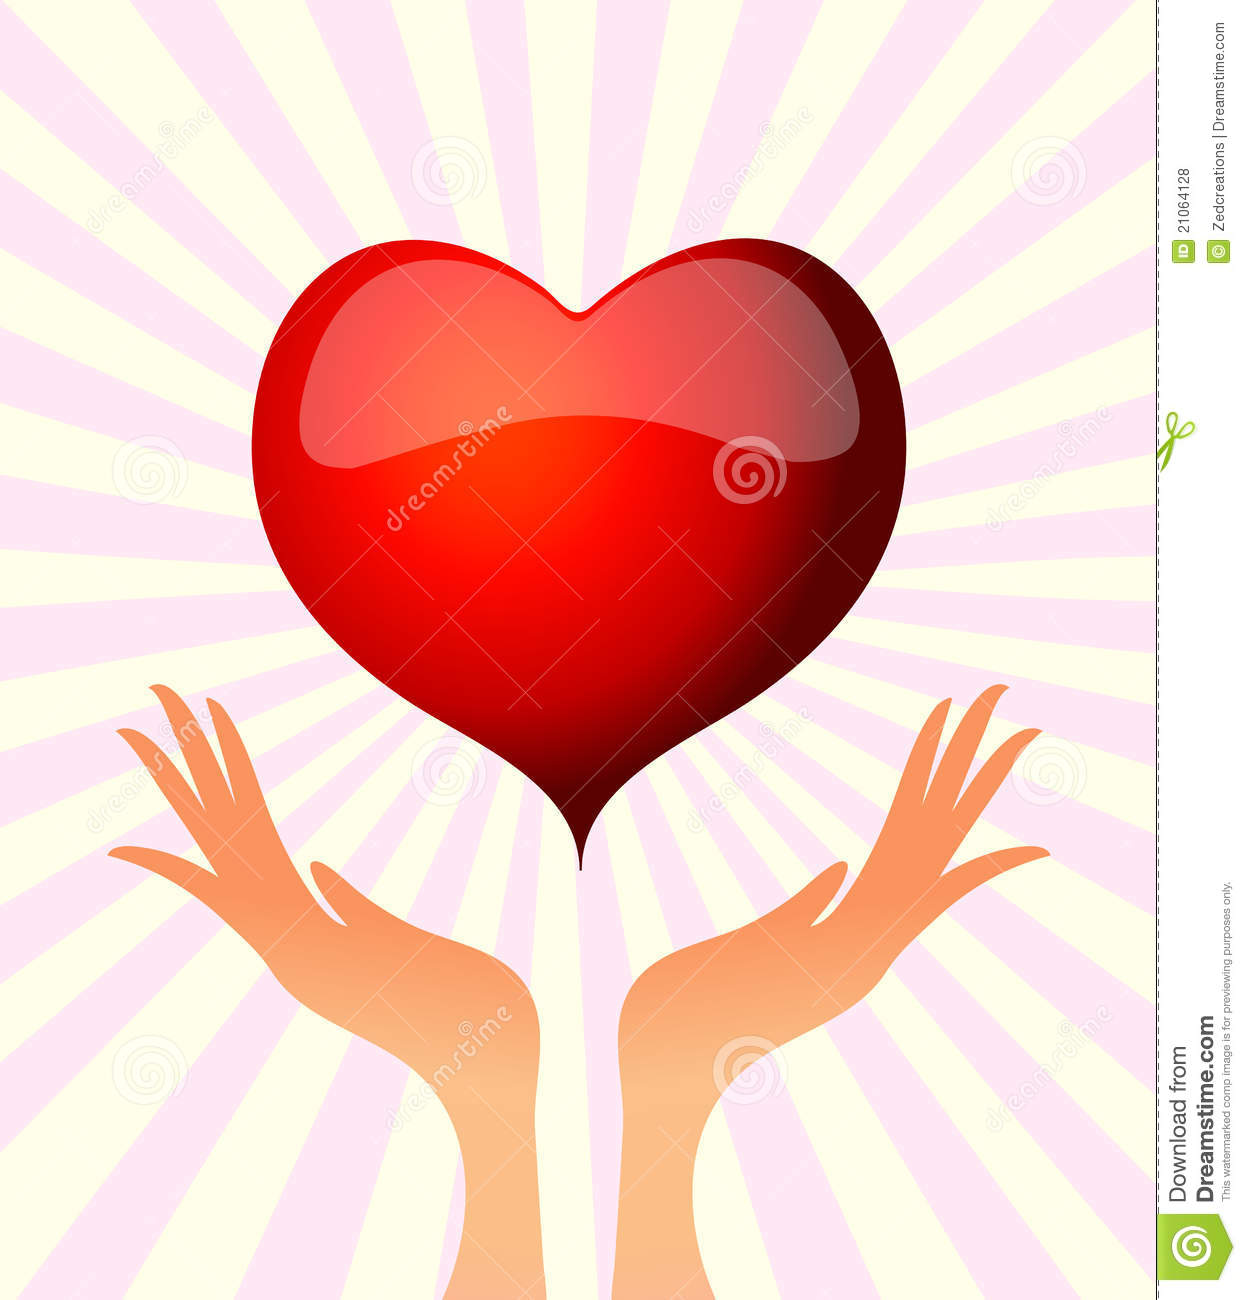 Hand Holding Heart Royalty Free Stock Photos   Image  21064128